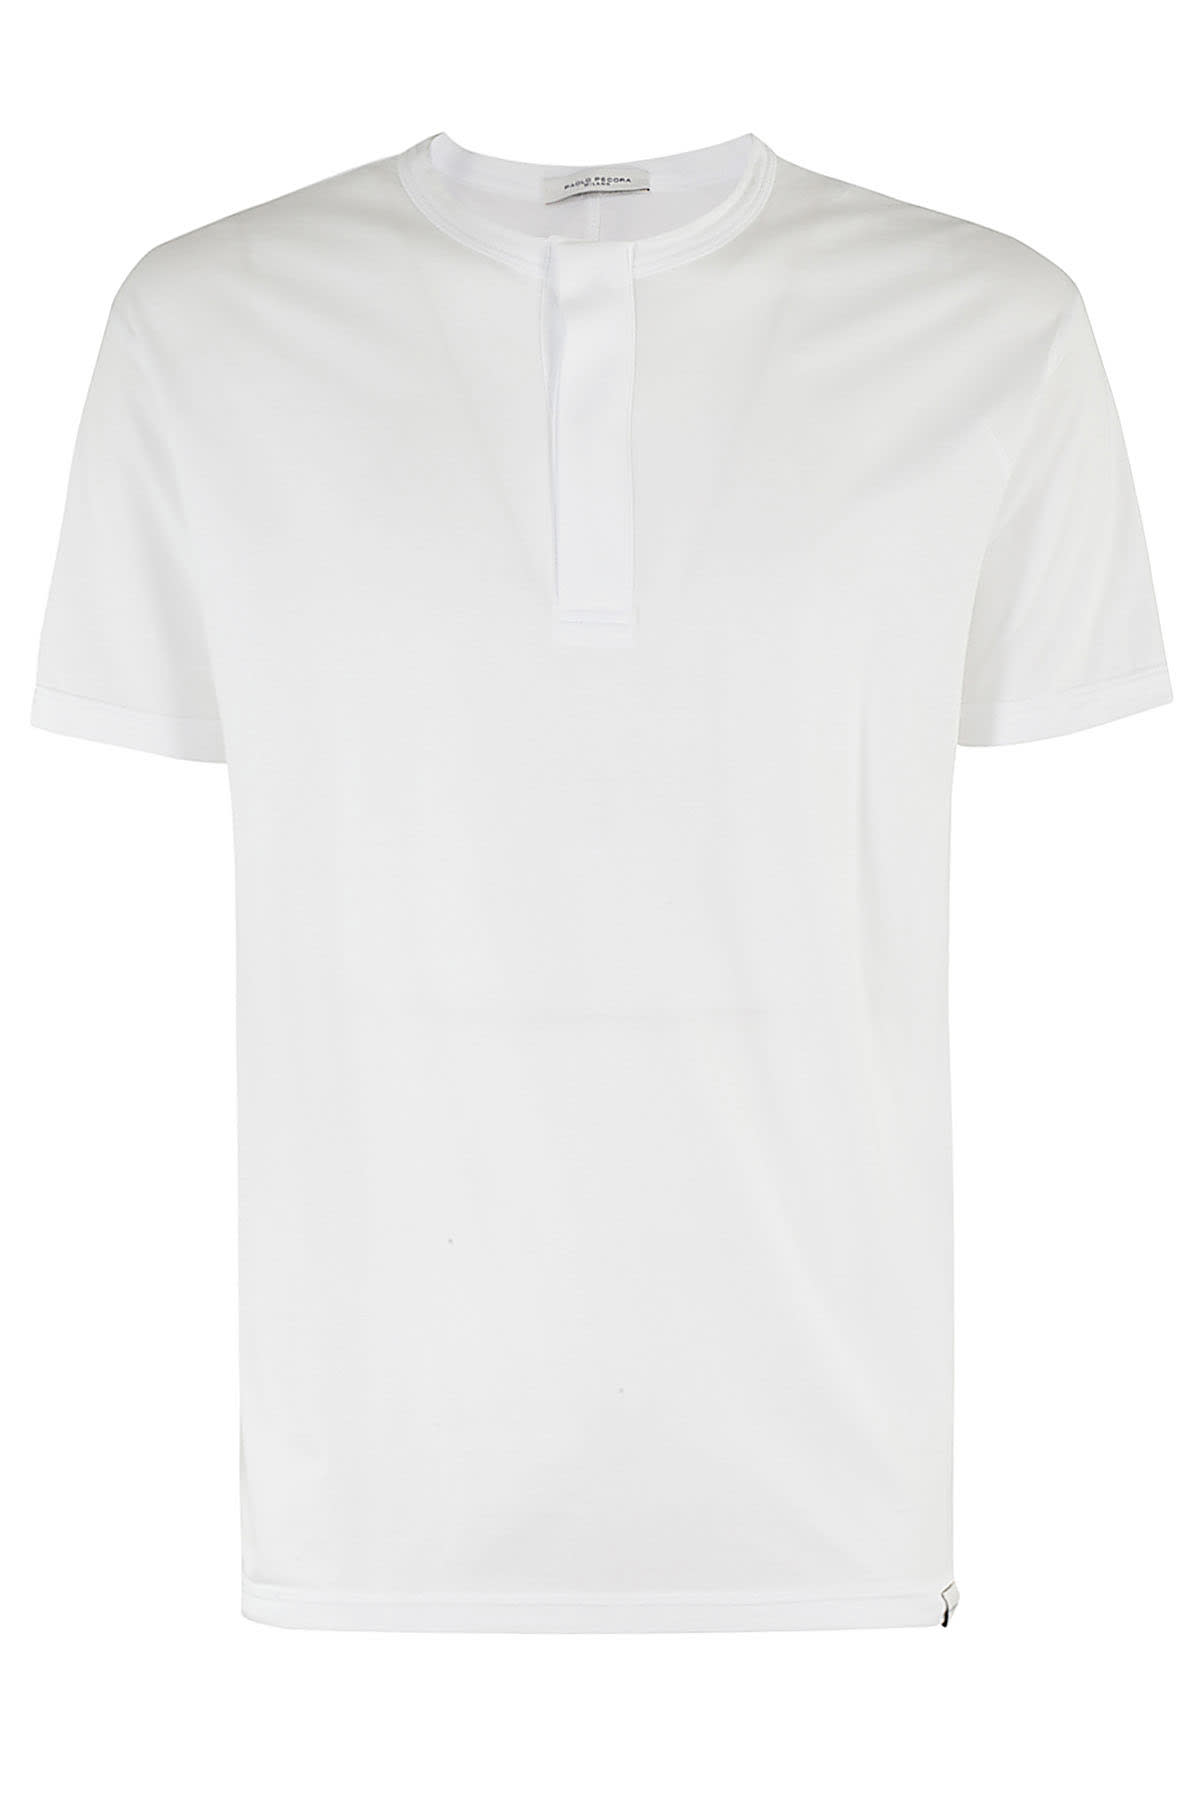 Paolo Pecora T Shirt Jersey In Bianco Ottico